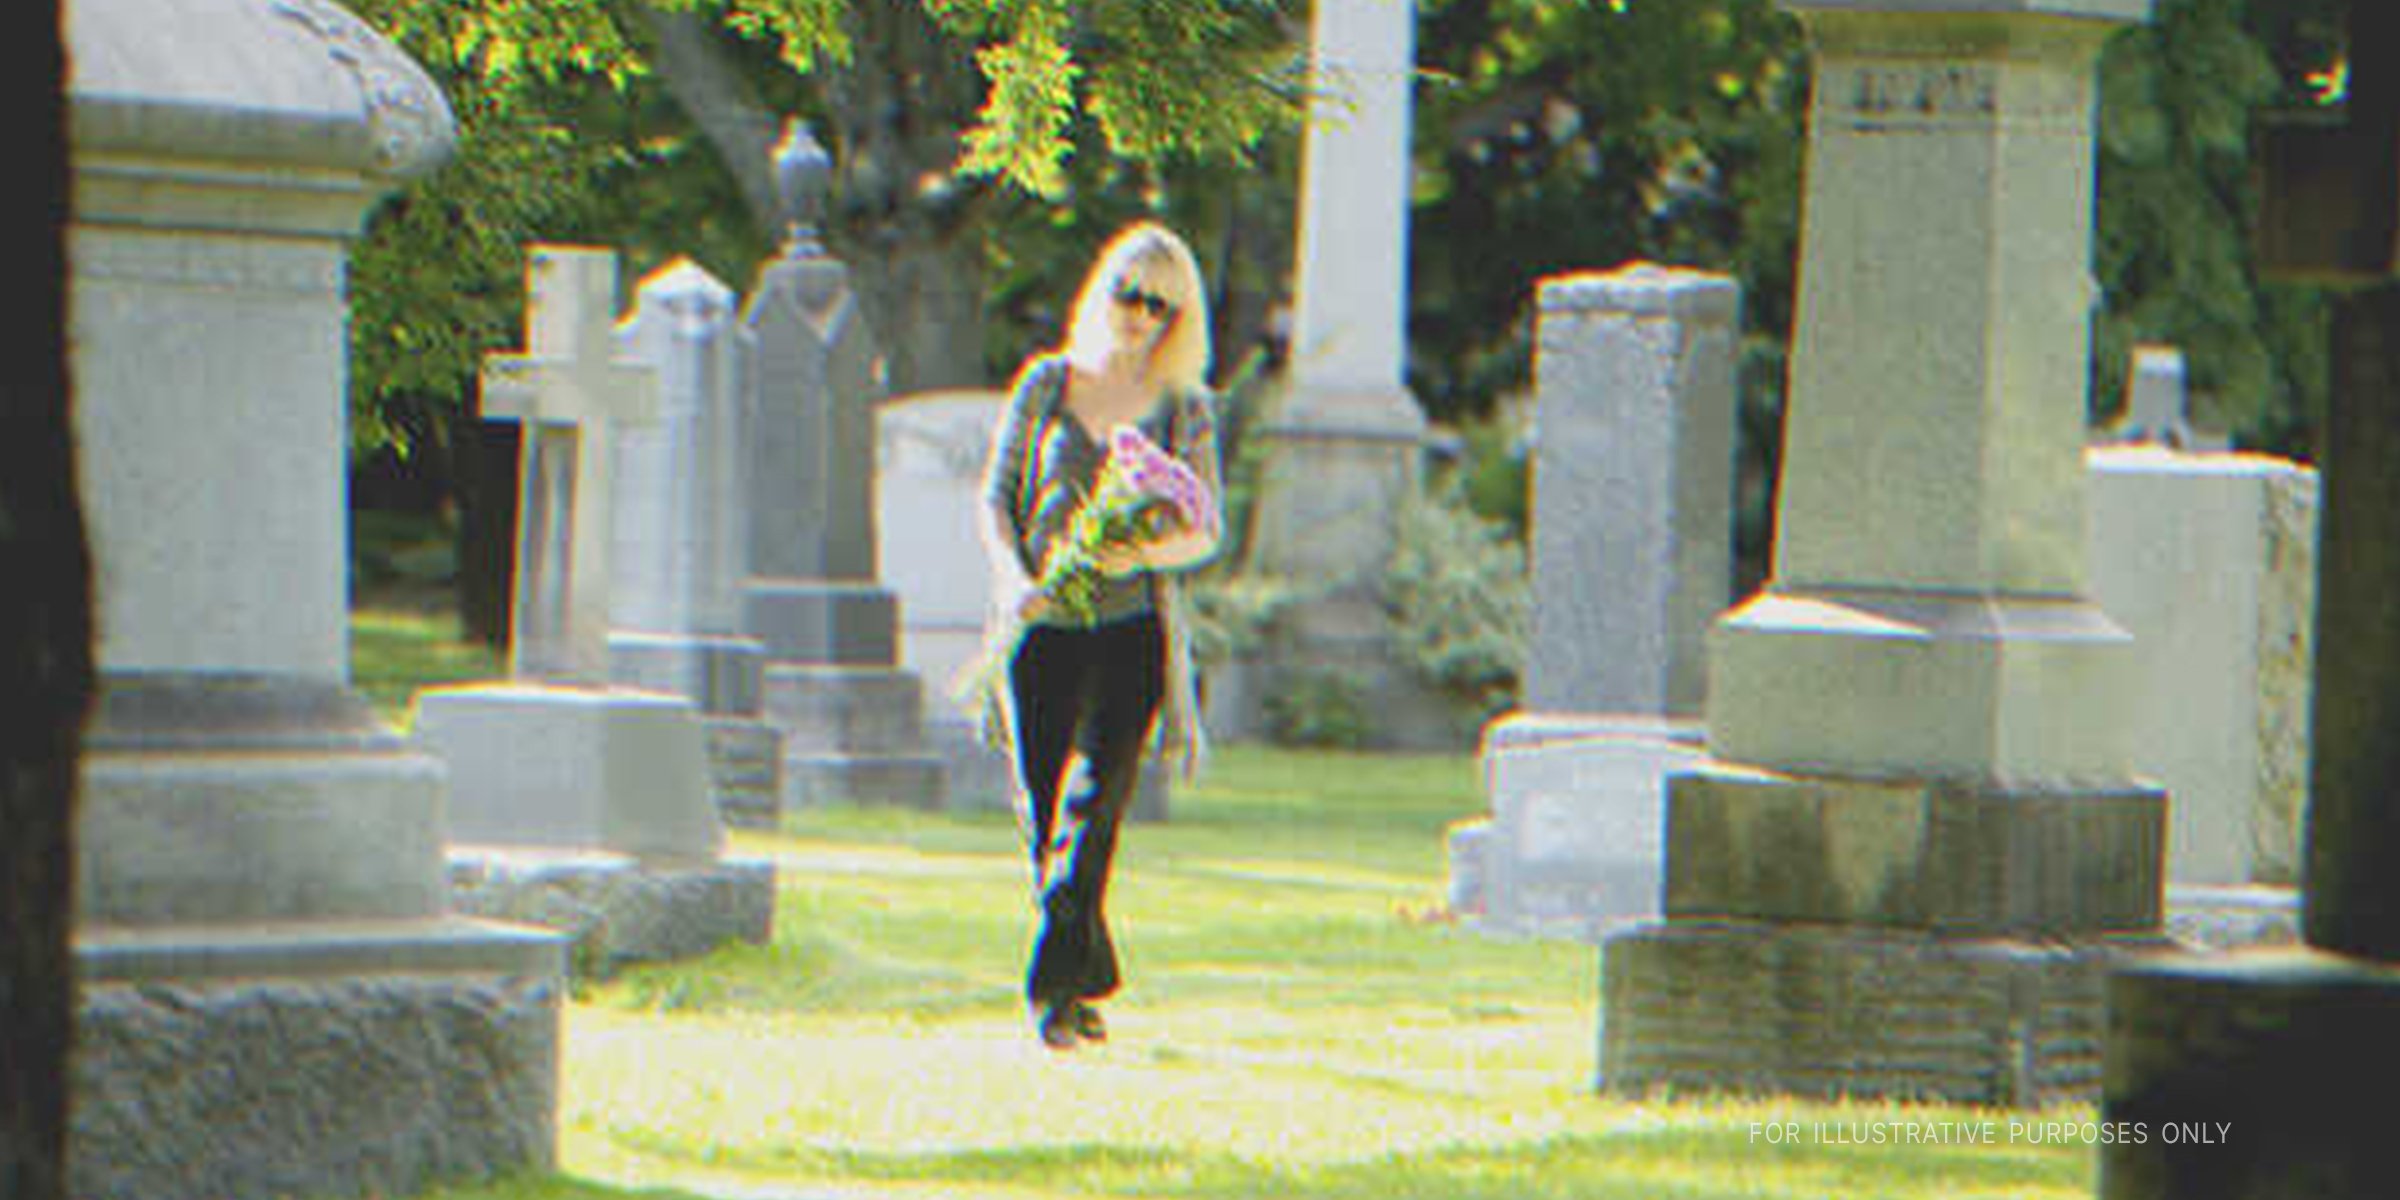 Woman in a cemetery | Source: Shutterstock